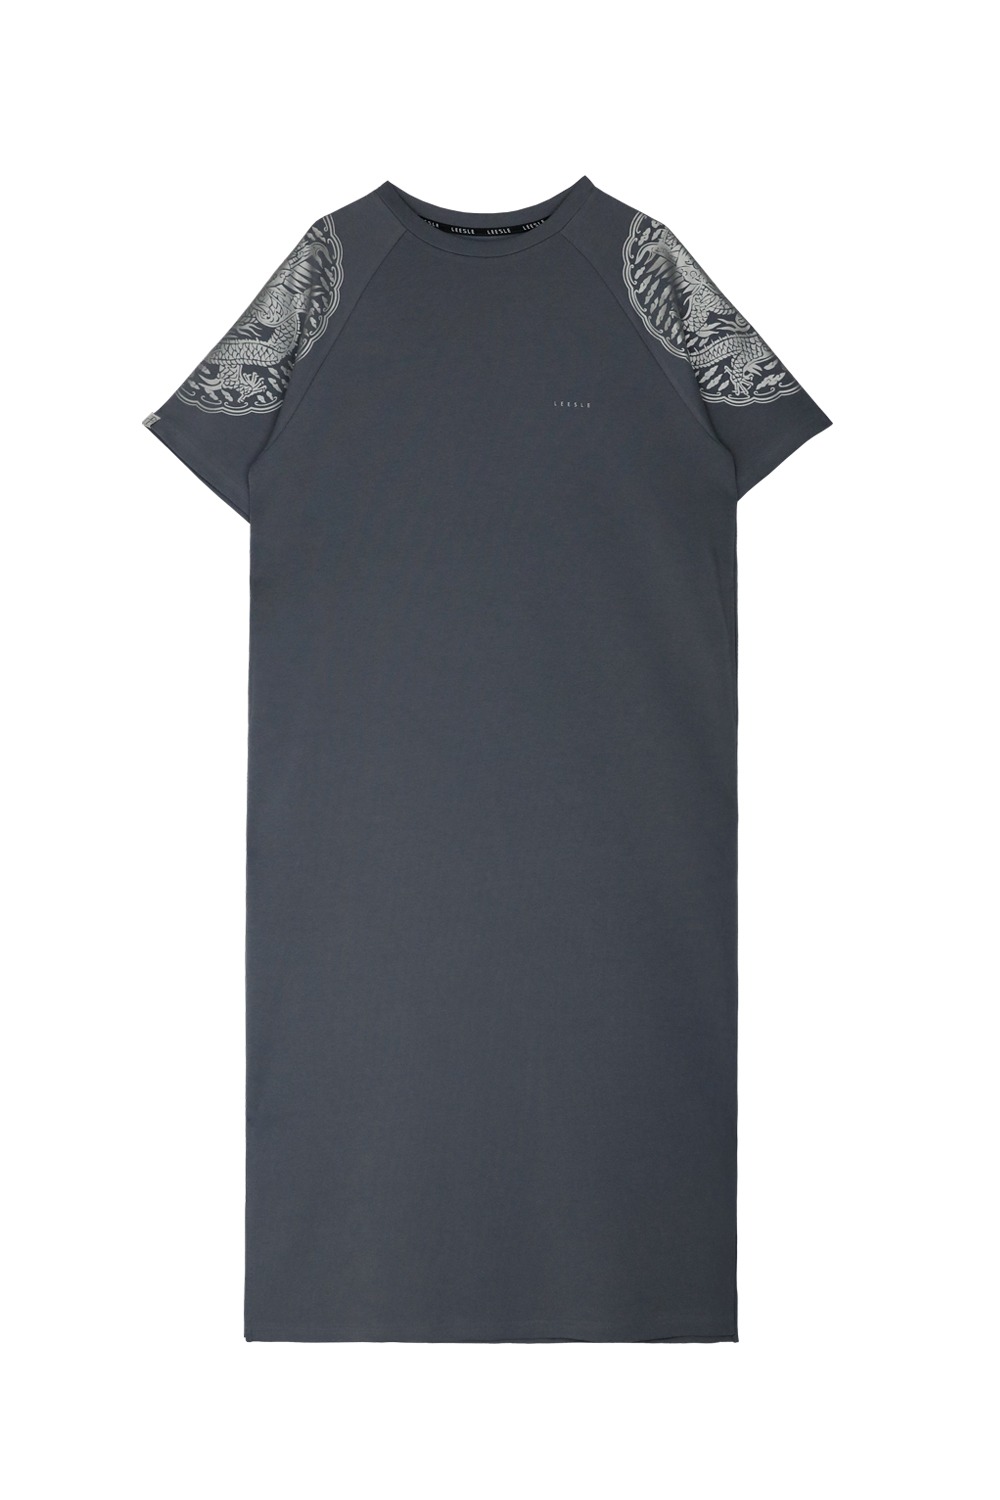 Dragon T-shirt Dress [Gray]